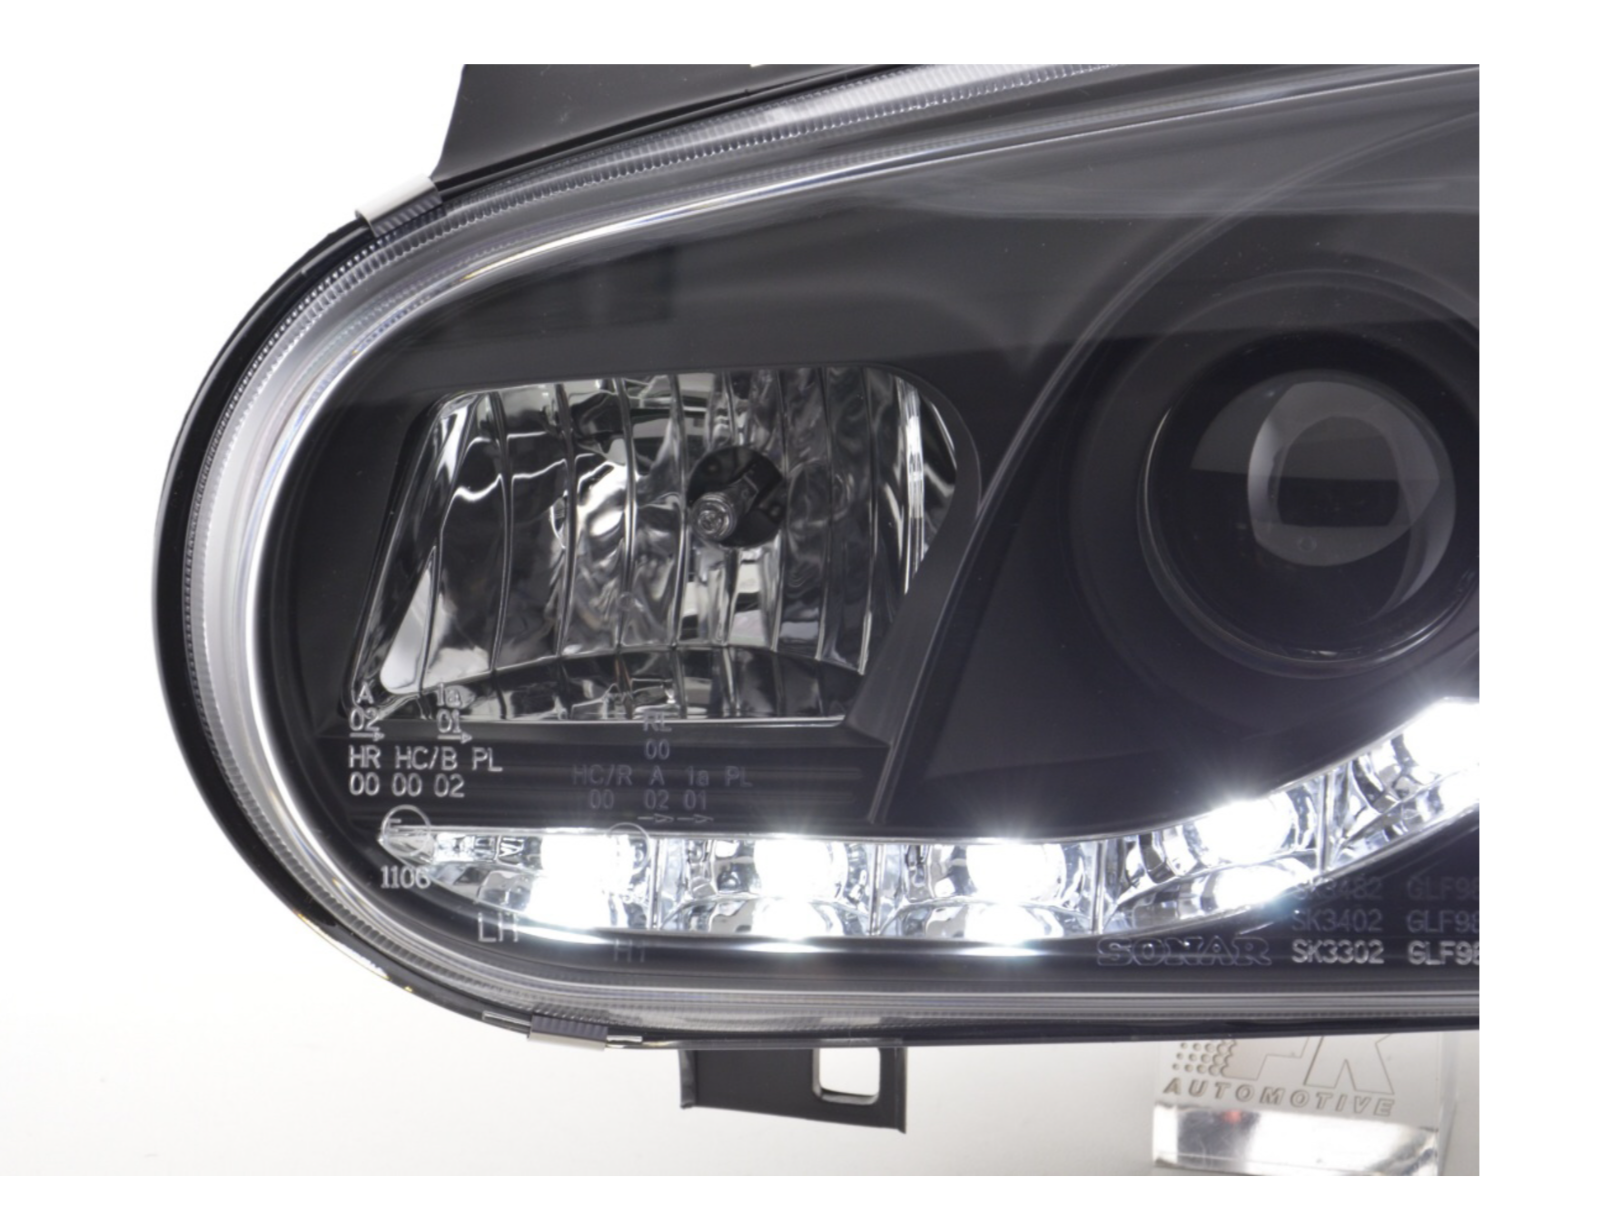 FK LED DRL Angel Eye Projector Headlight set VW Golf 4 MK4 1J 97-03 black RHD - LJ Automotive